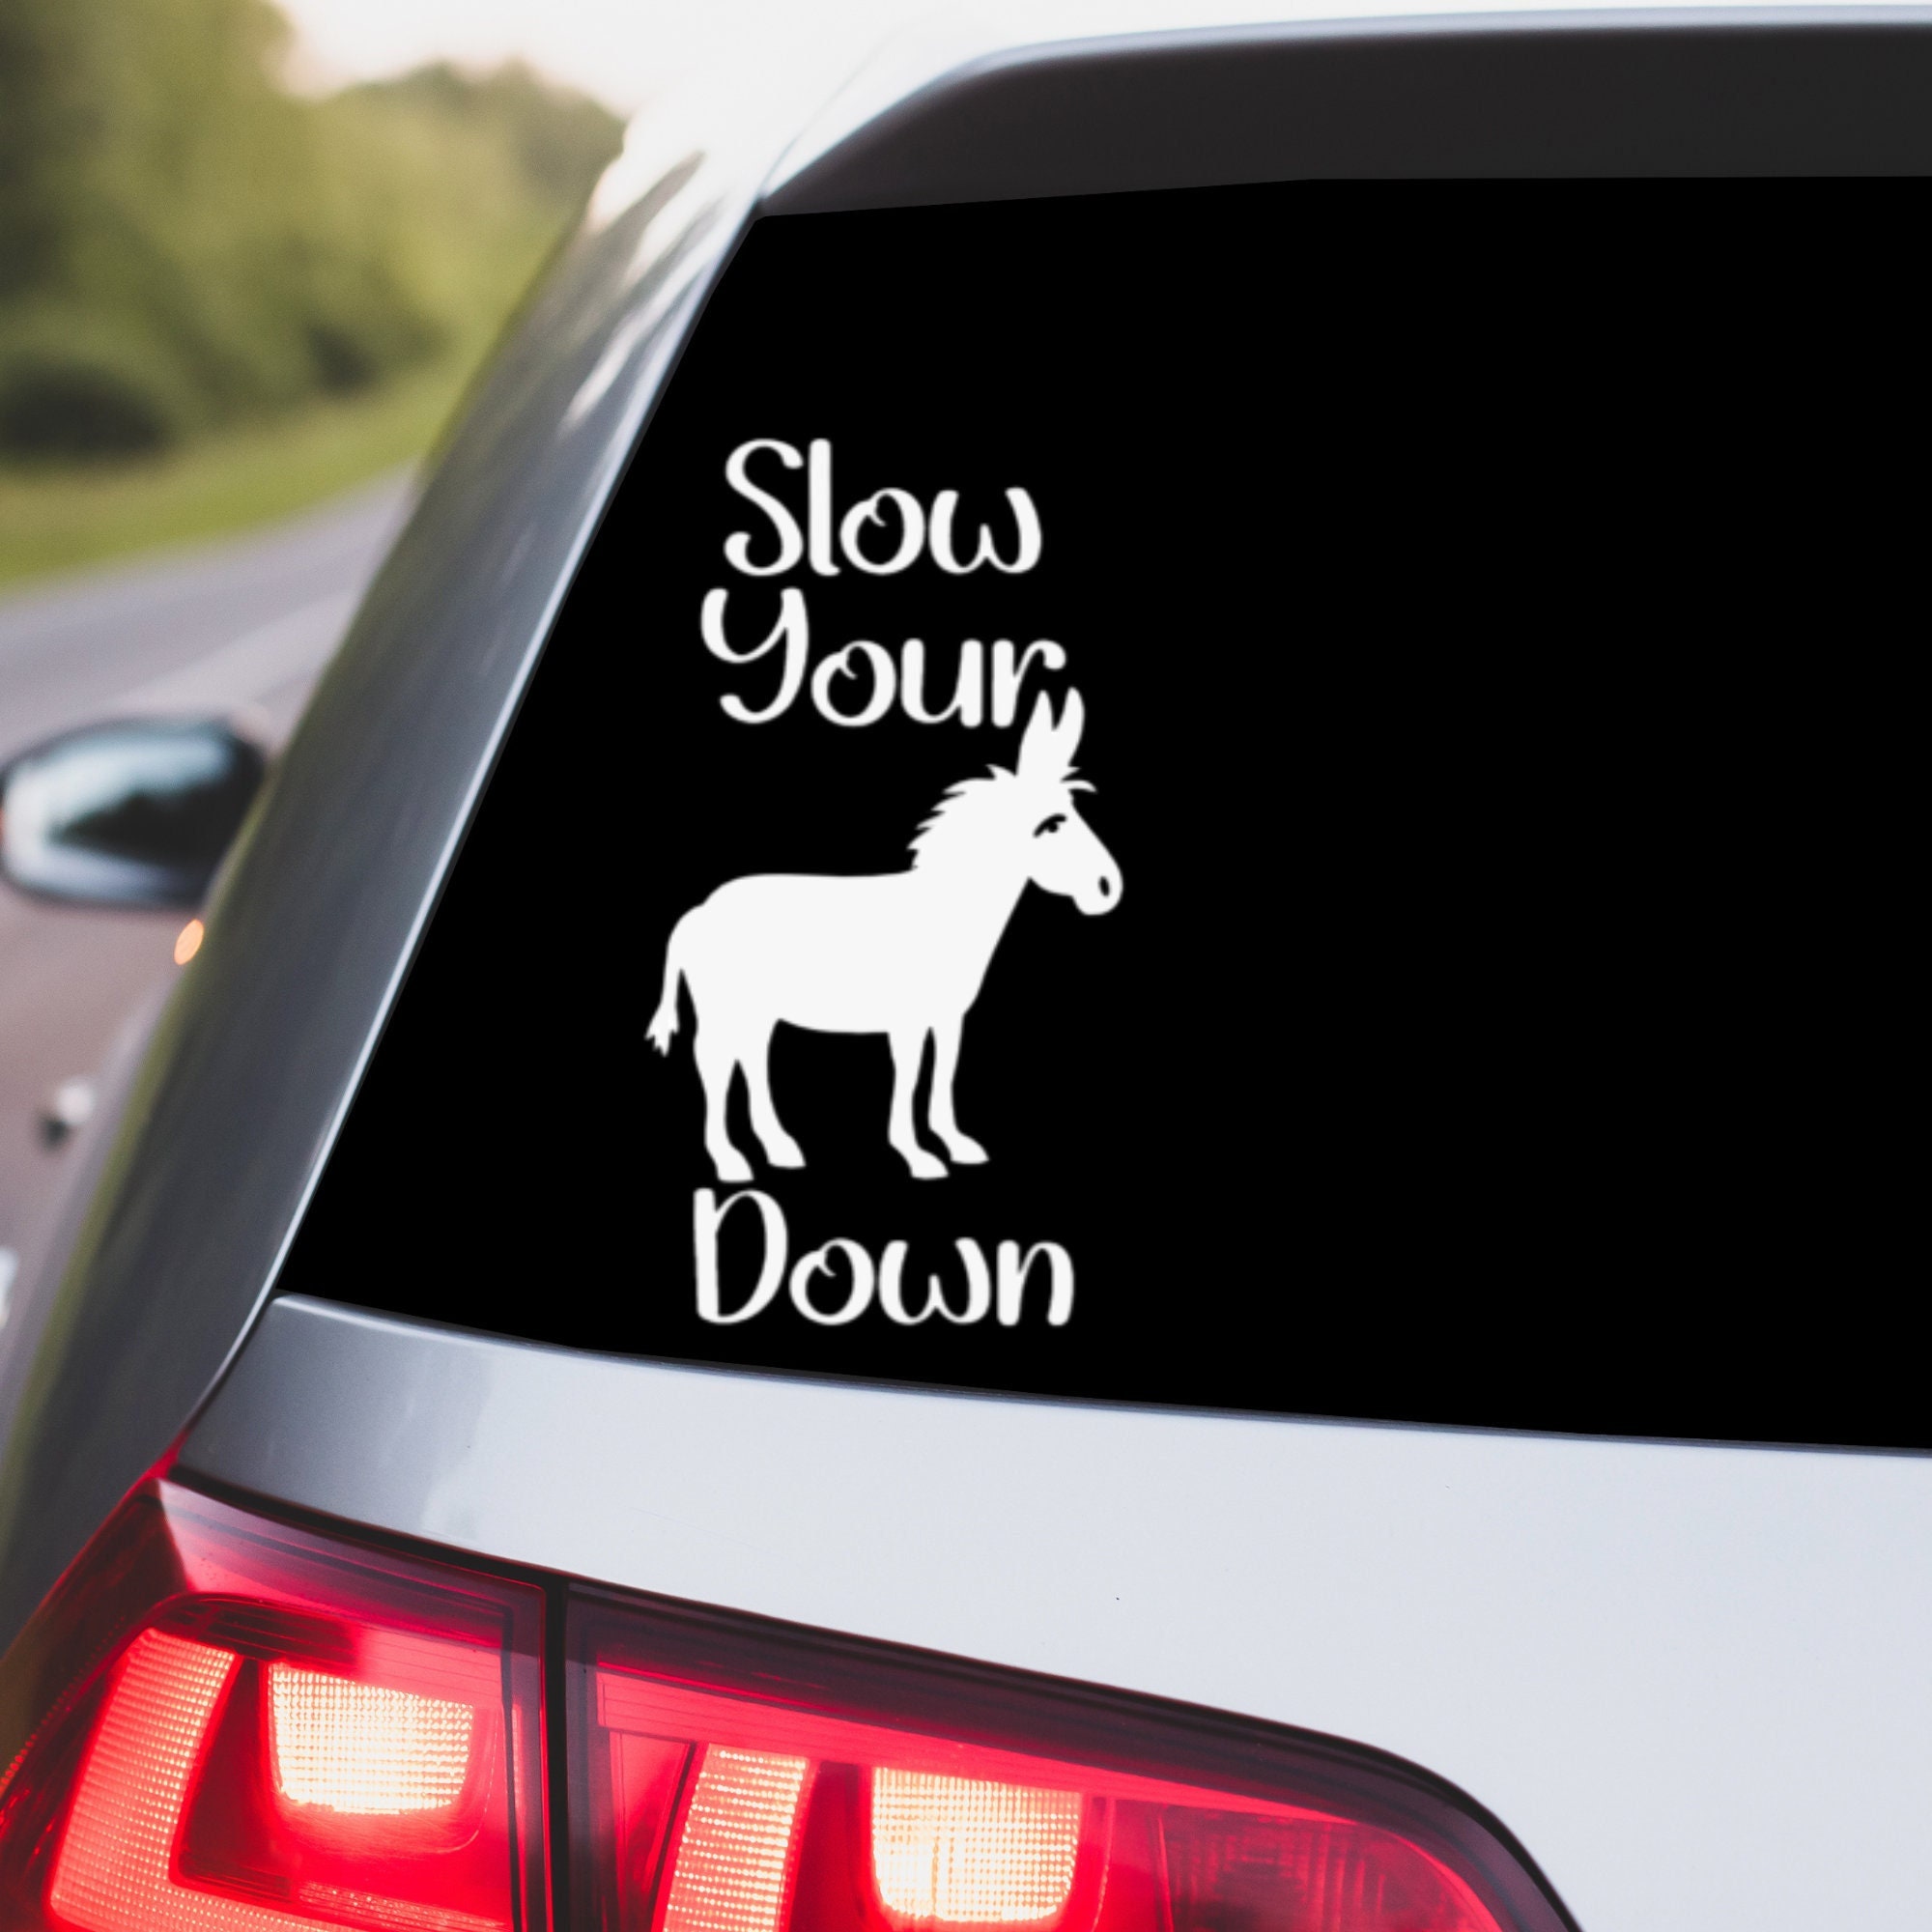 Deceptively Slow Vehicle - Warning Sign - Sticker